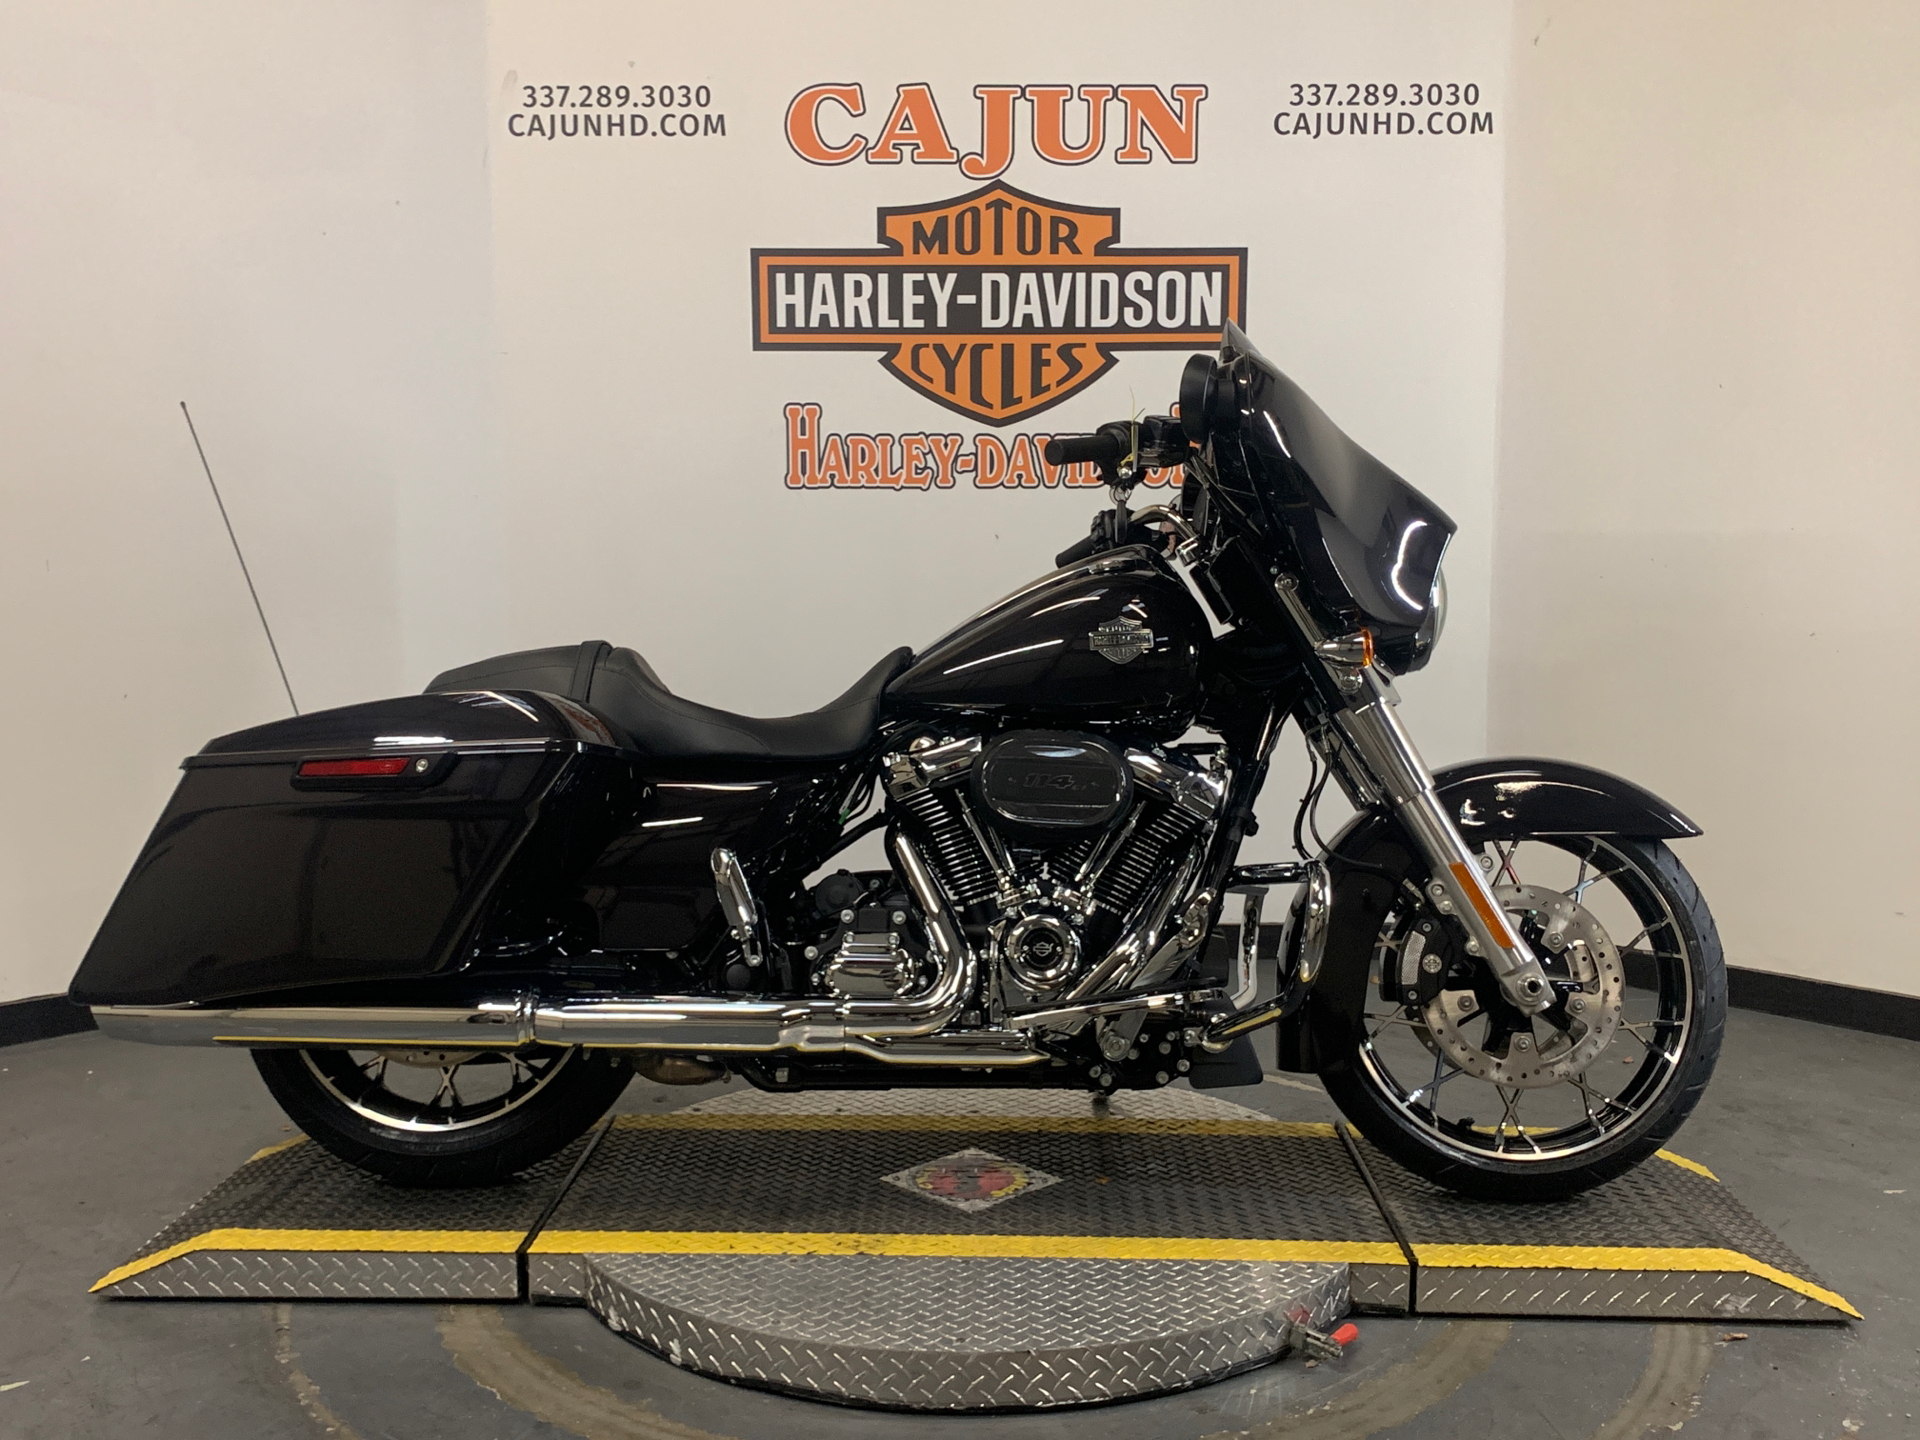 New 2021 Harley Davidson Street Glide Special Black Jack Metallic Chrome Option Motorcycles In Scott La 604763